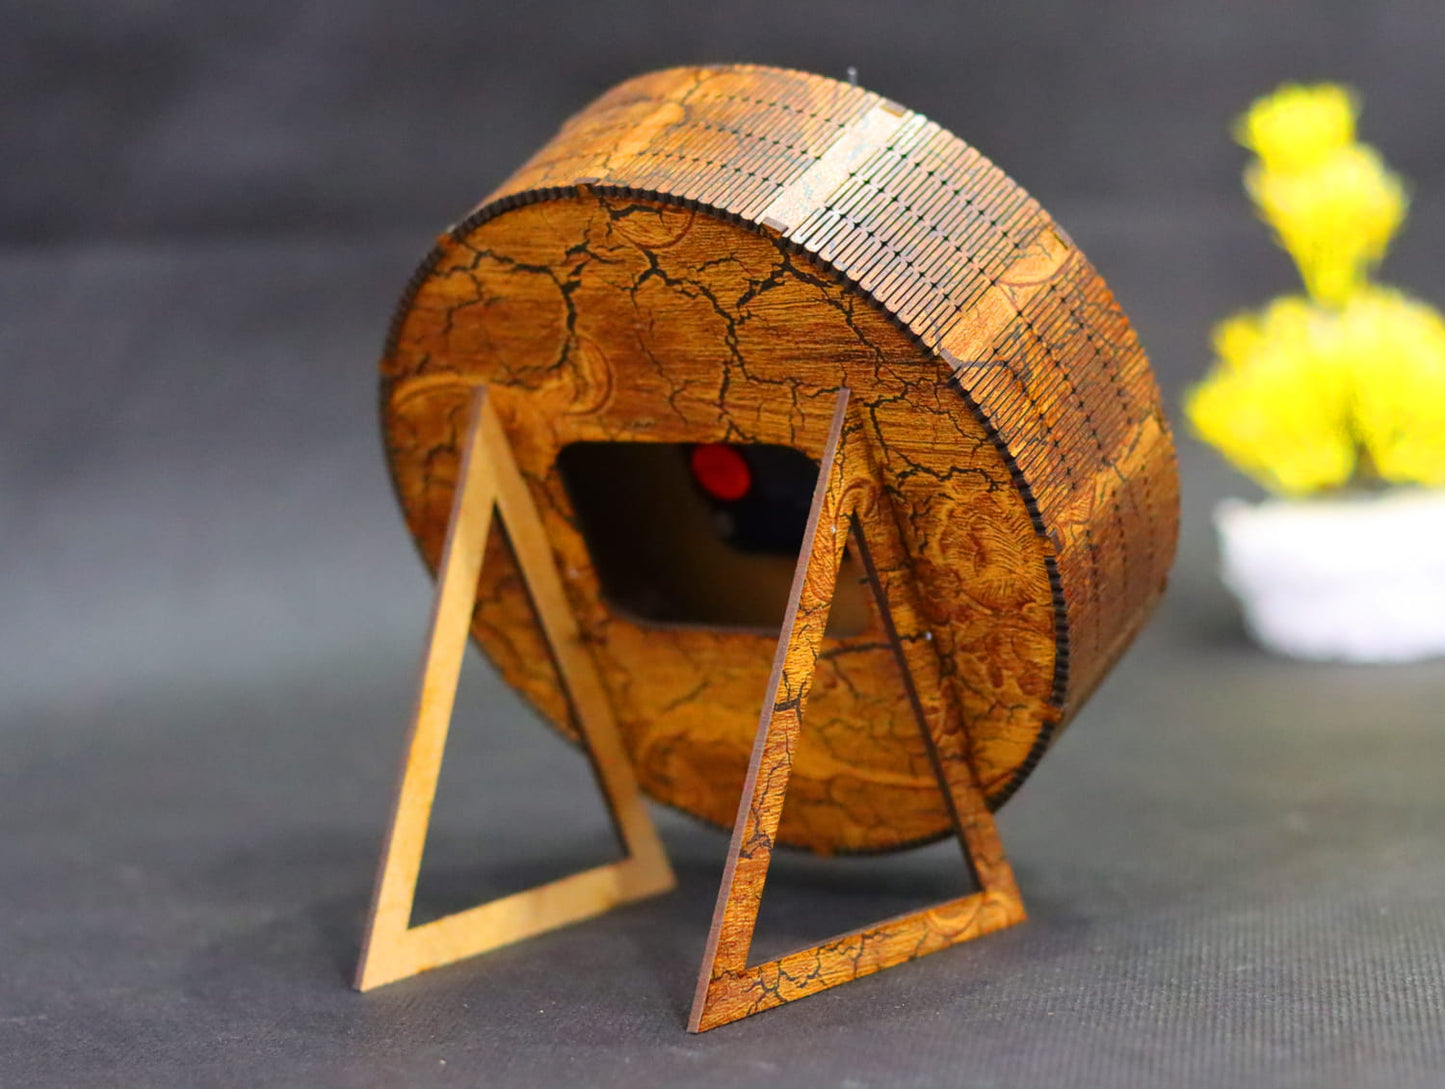 Laser Cut Wooden Desk Clock Minimalist Design Vector